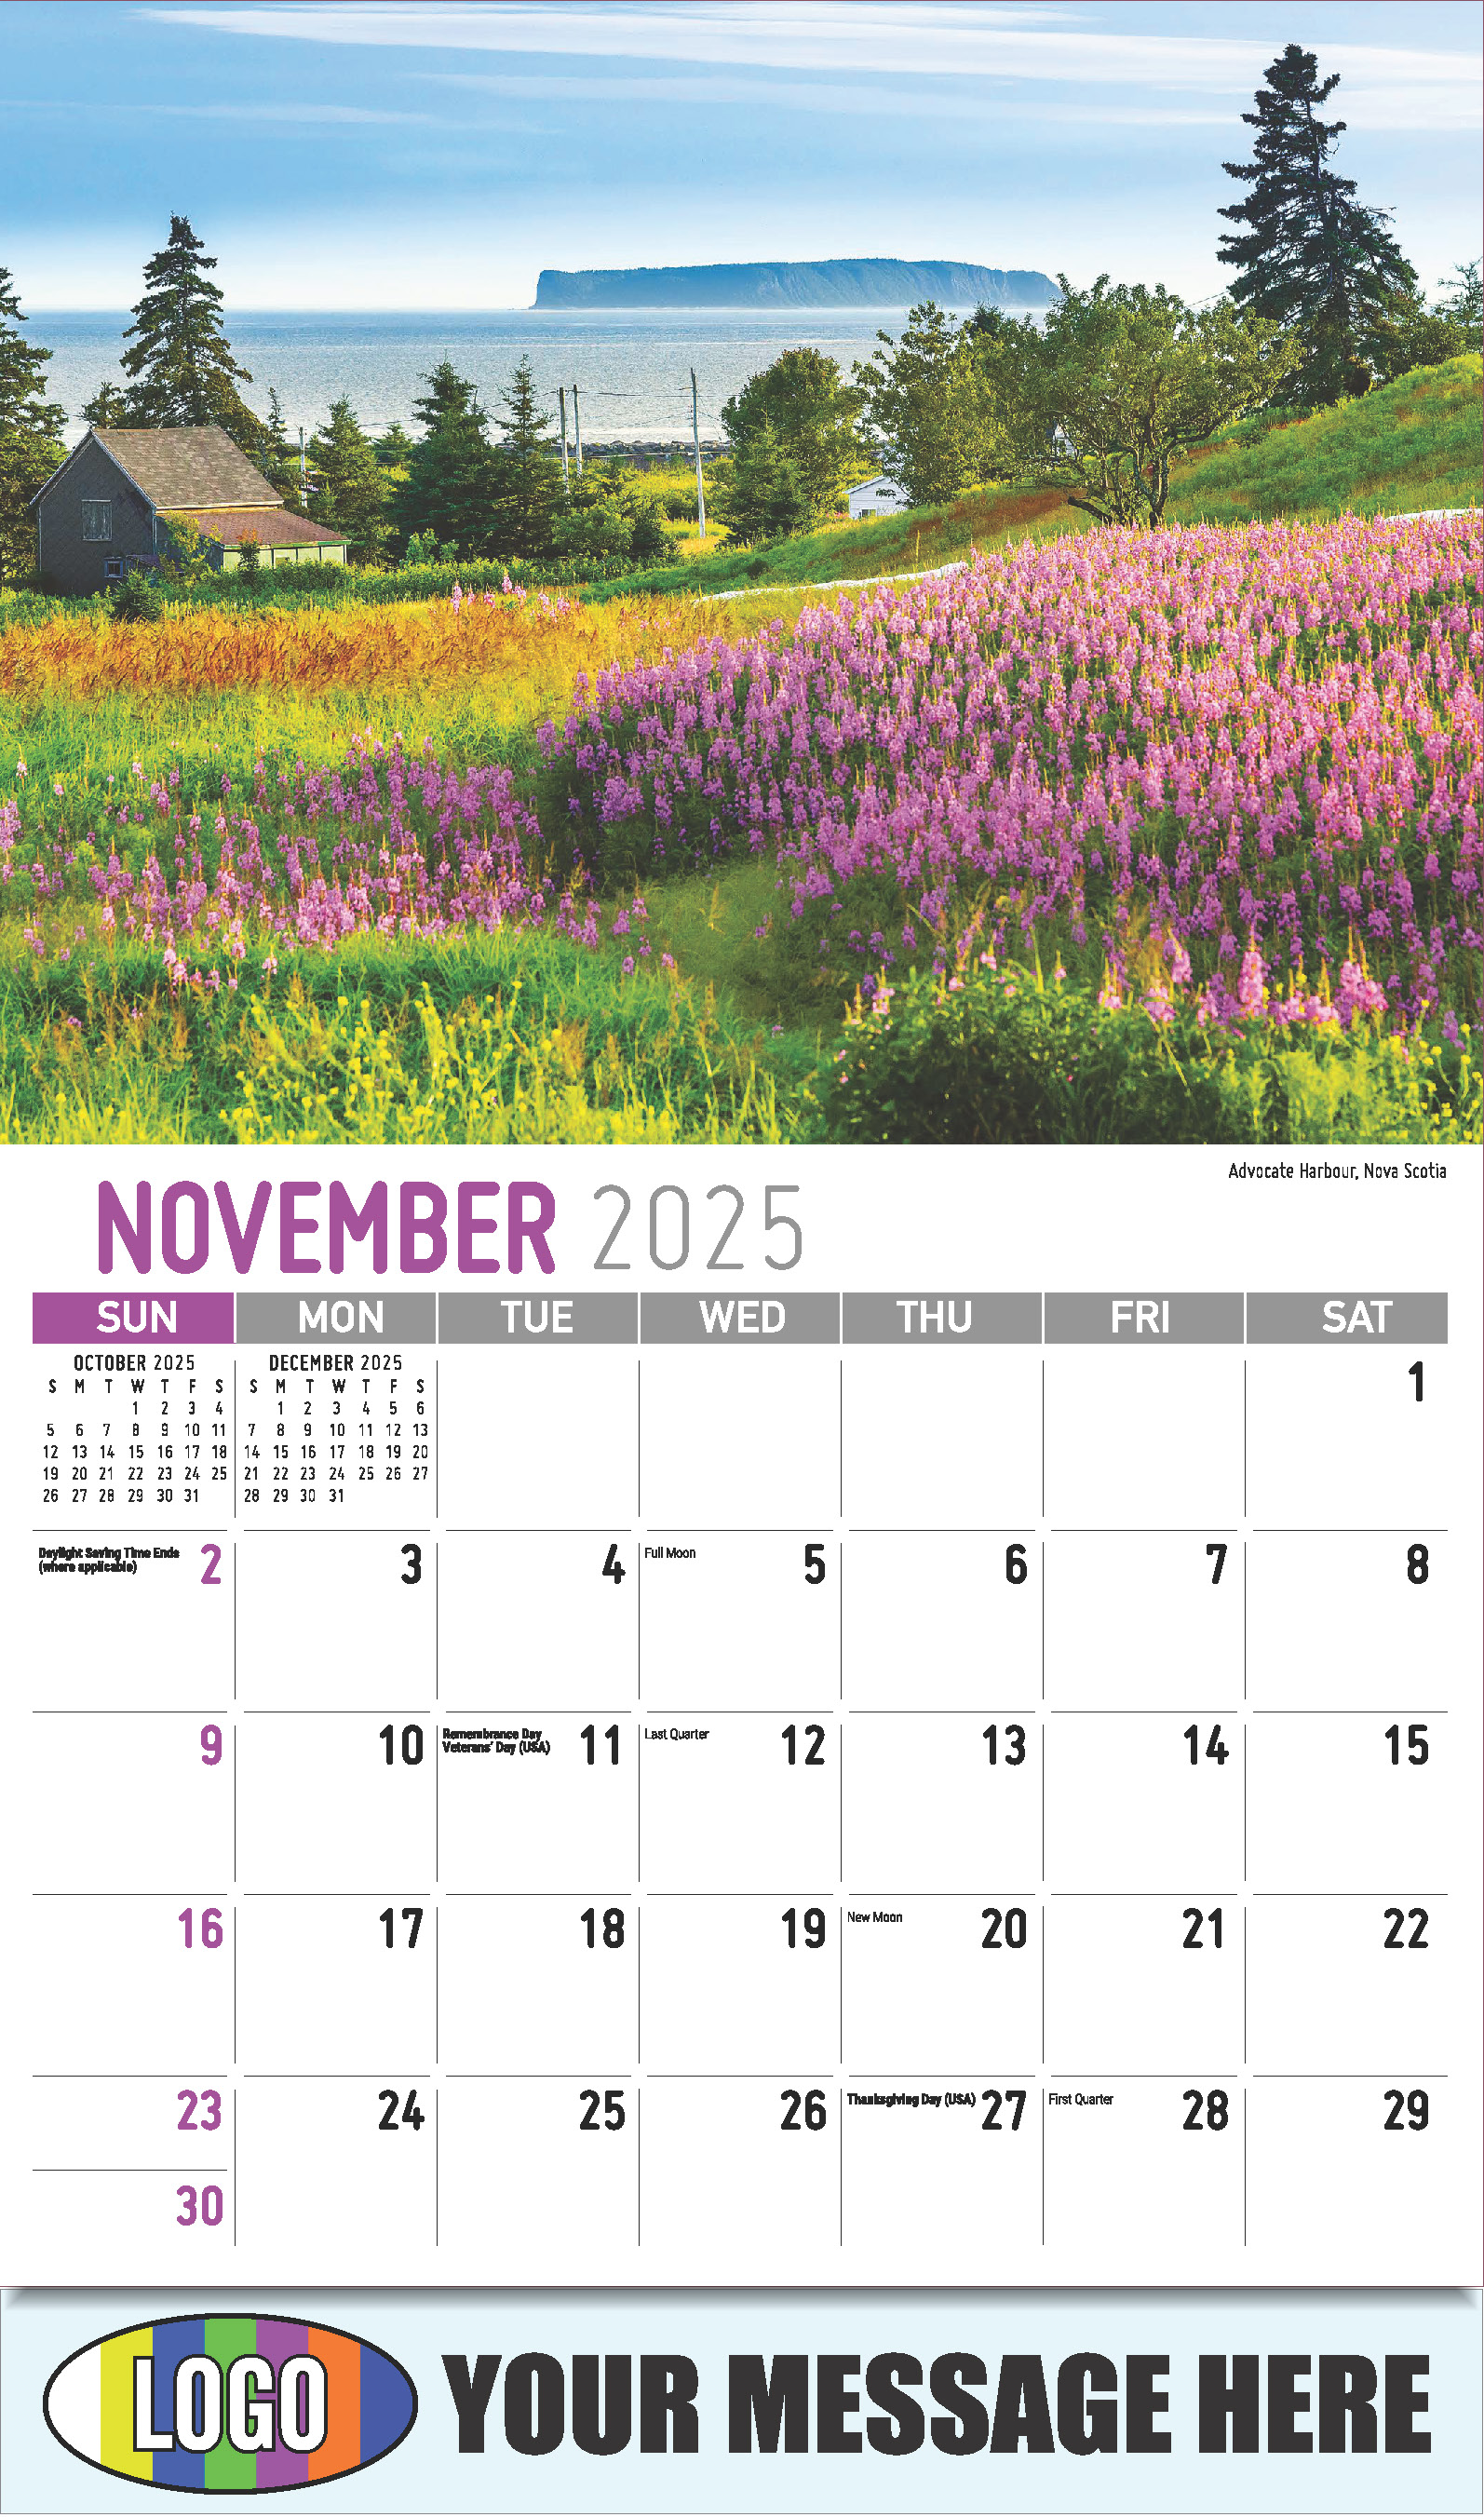 Atlantic Canada Scenic 2025 Business Promotion Calendar - November